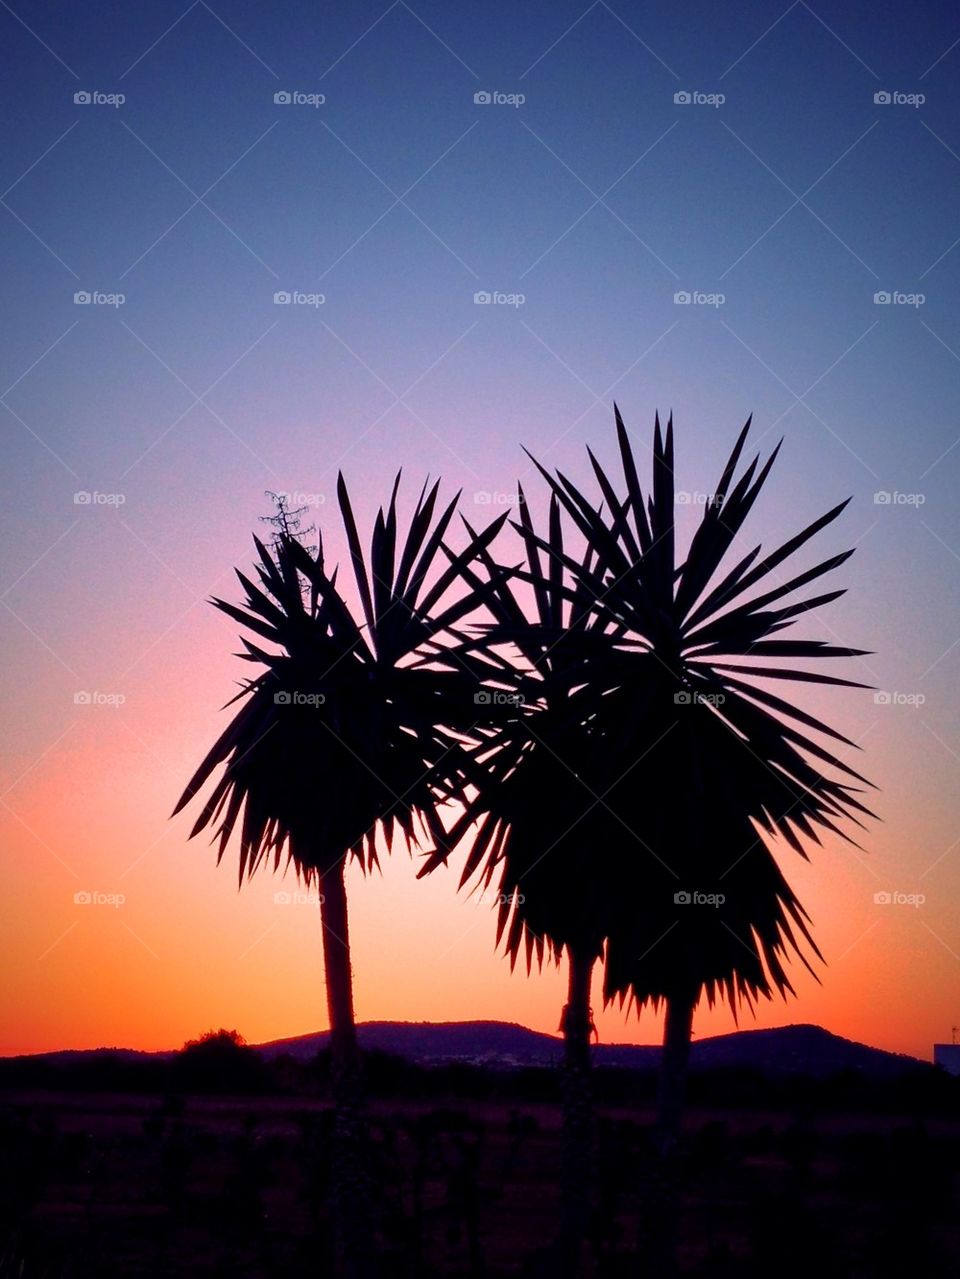 Sunset palms